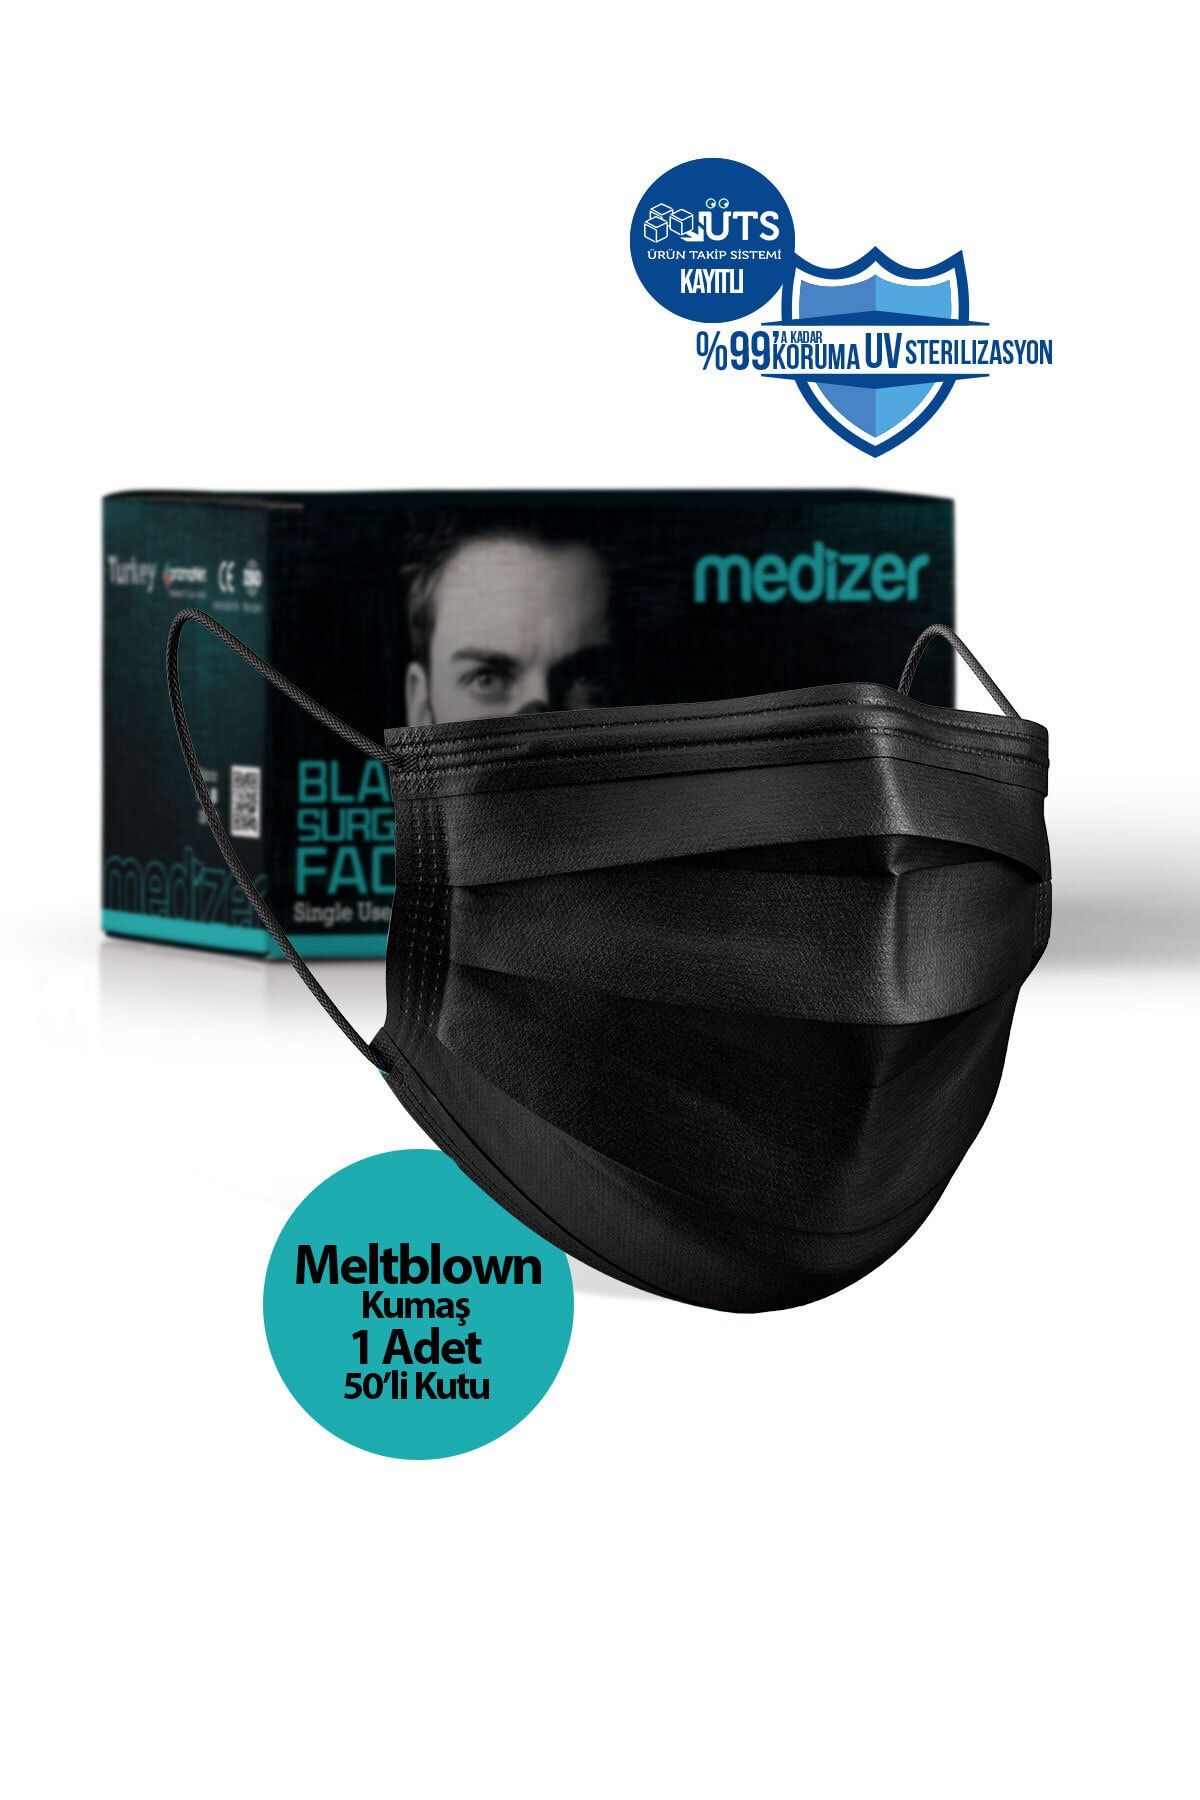 Medizer Siyah Cerrahi Maske Meltblown - 50 Adet